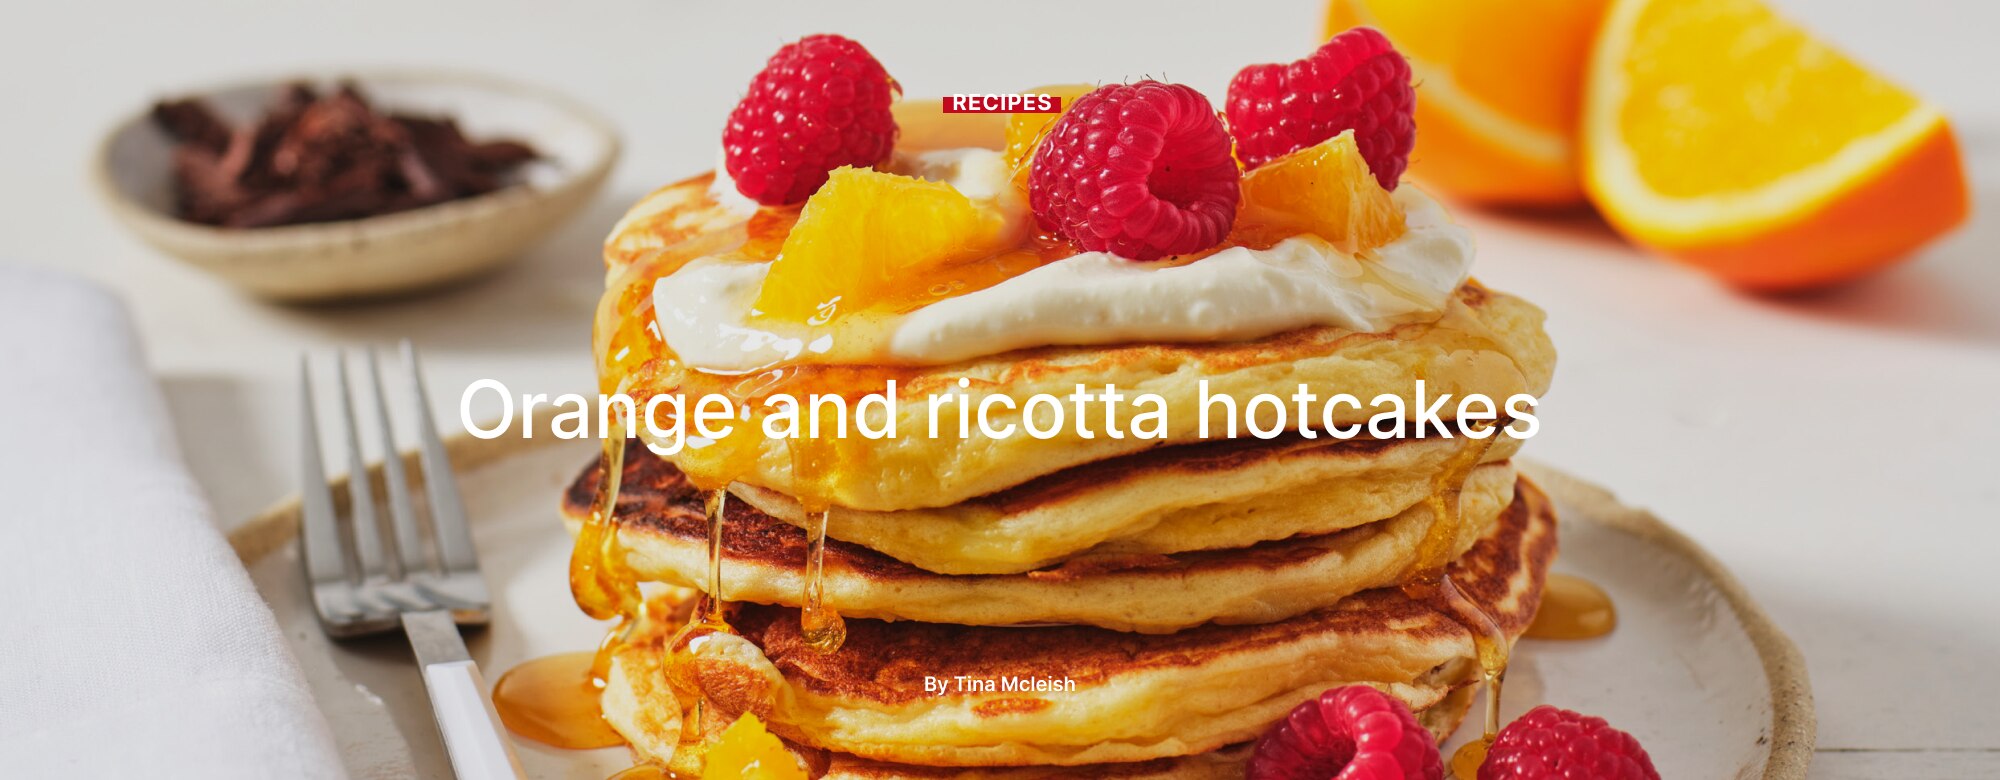 Orange and ricotta hotcakes